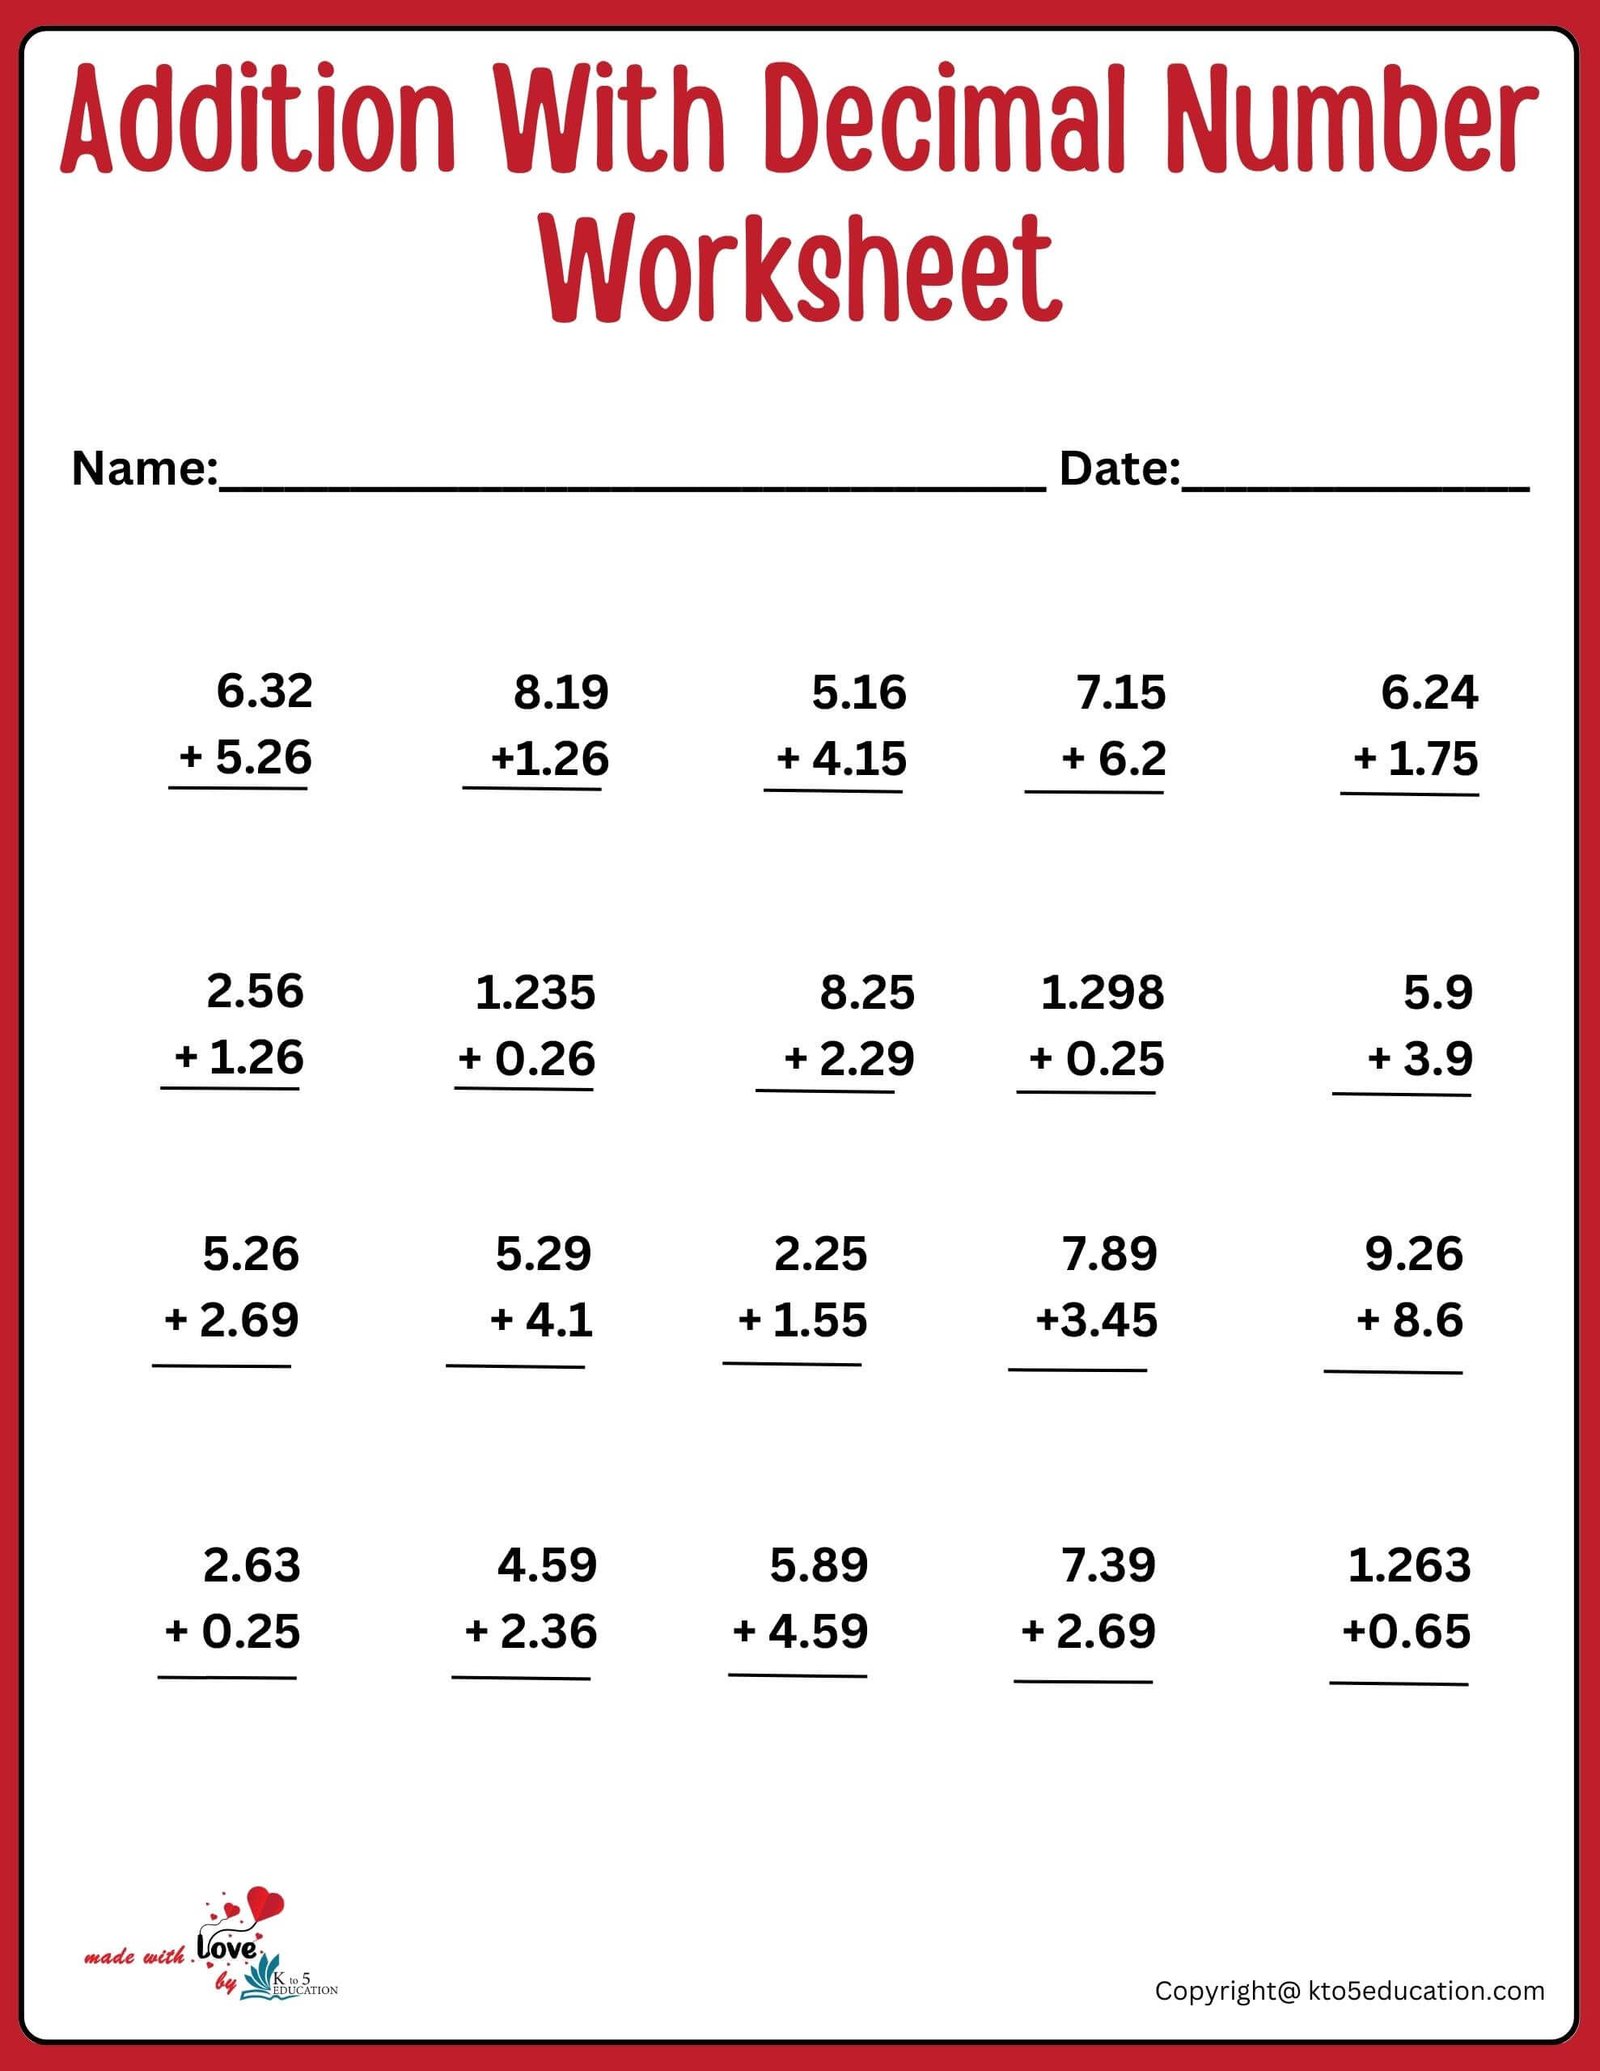 Adding Decimal Numbers Worksheet